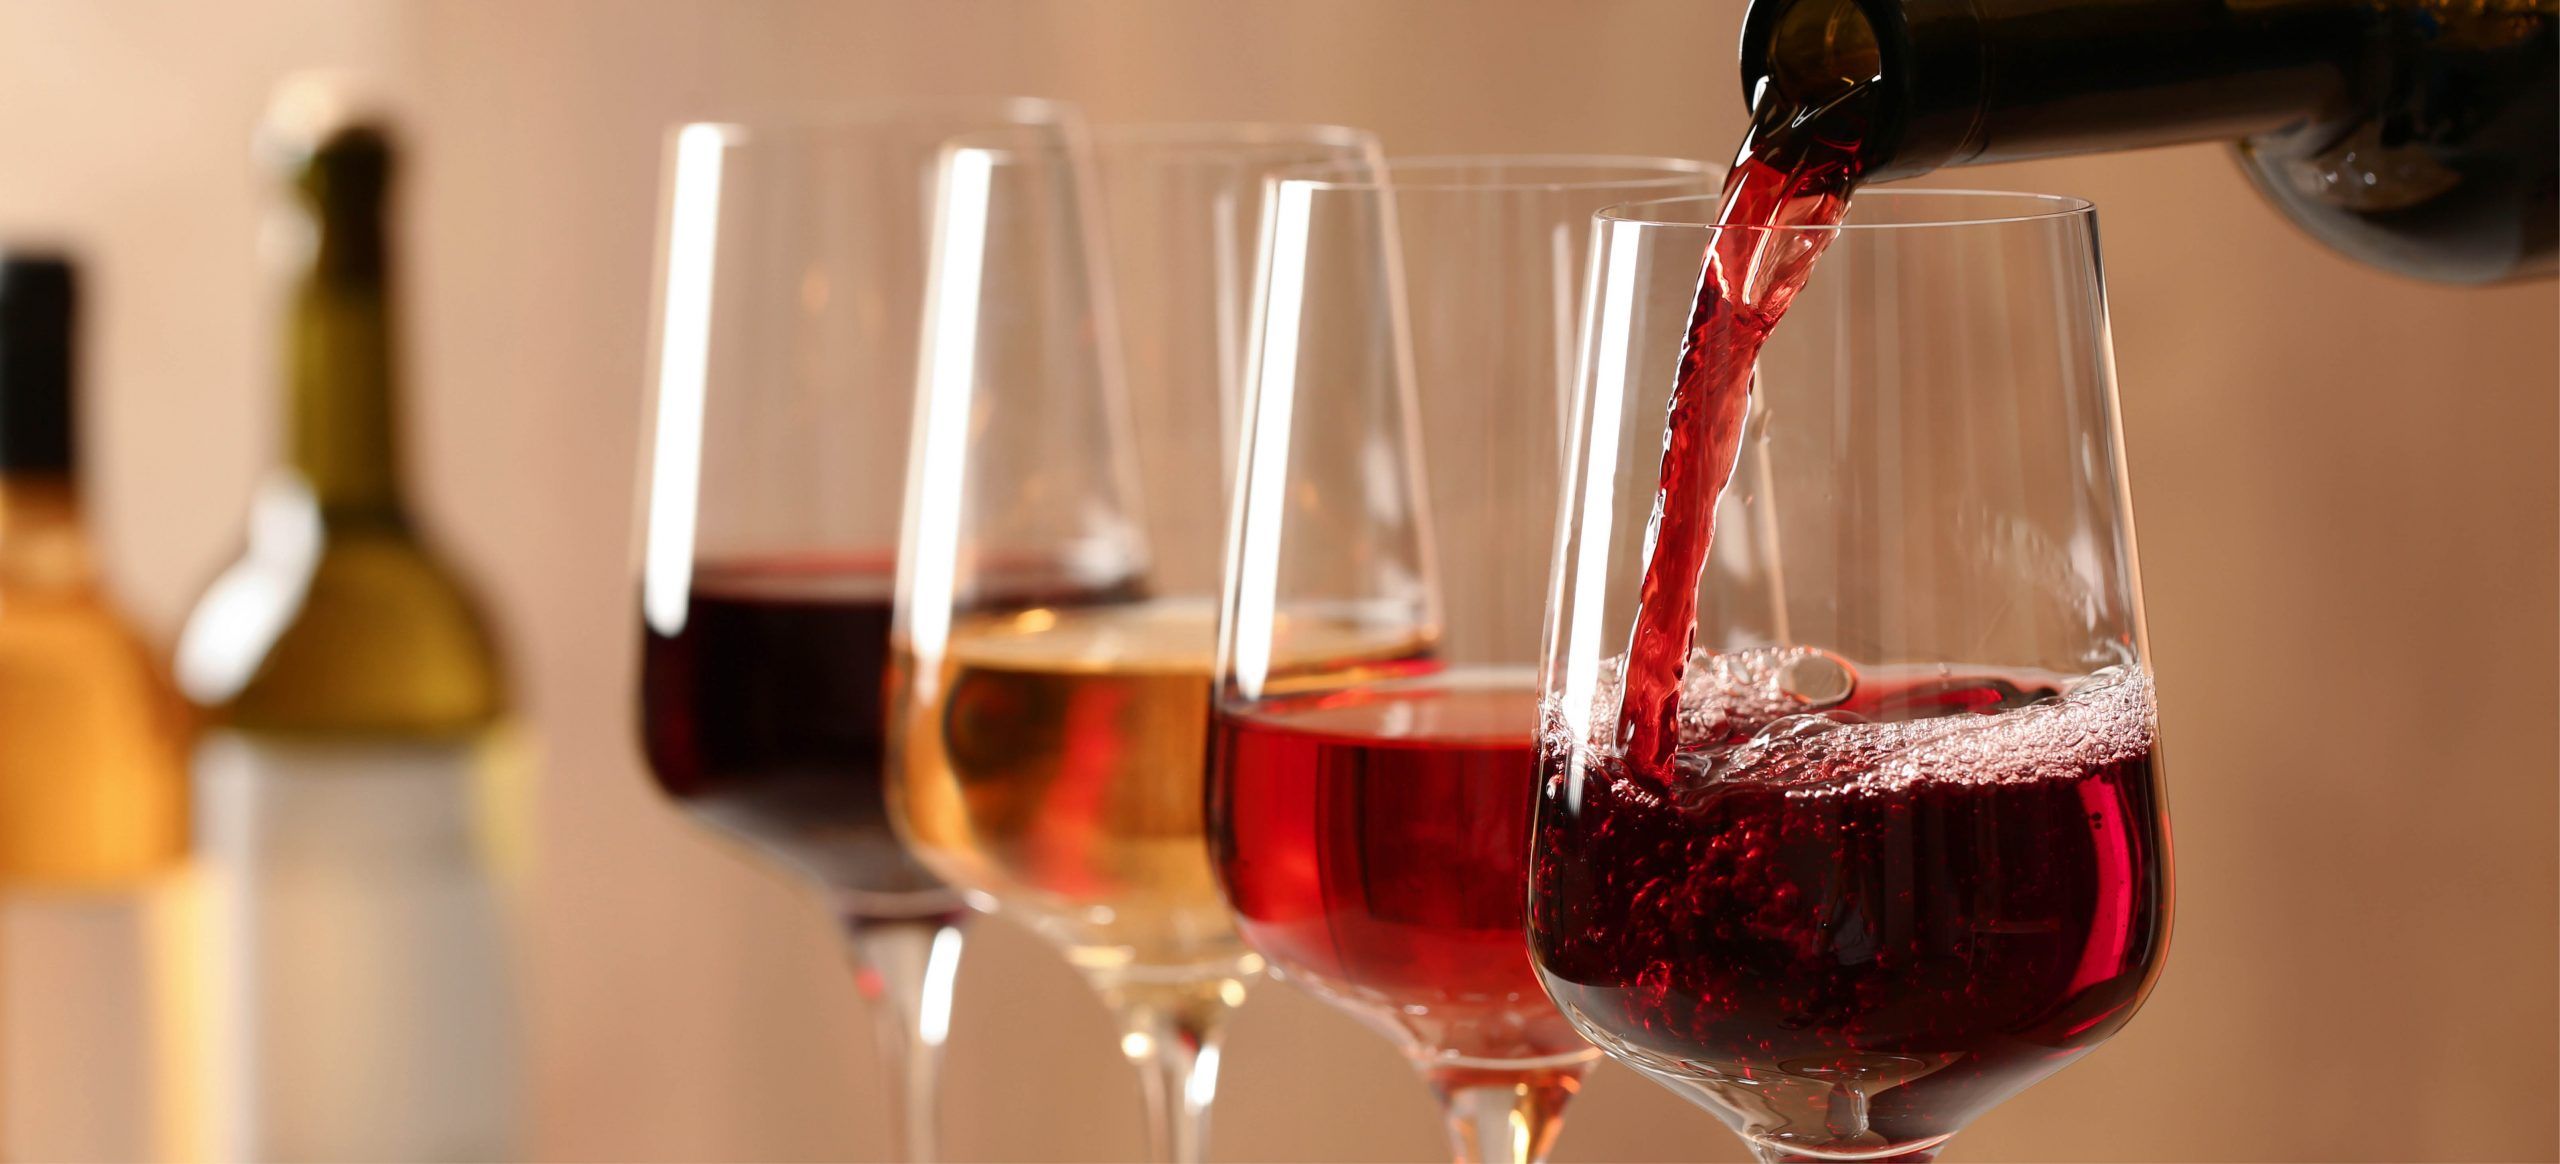 Enartis Zenith Prevent the formation of tartrate crystals in wine bottles